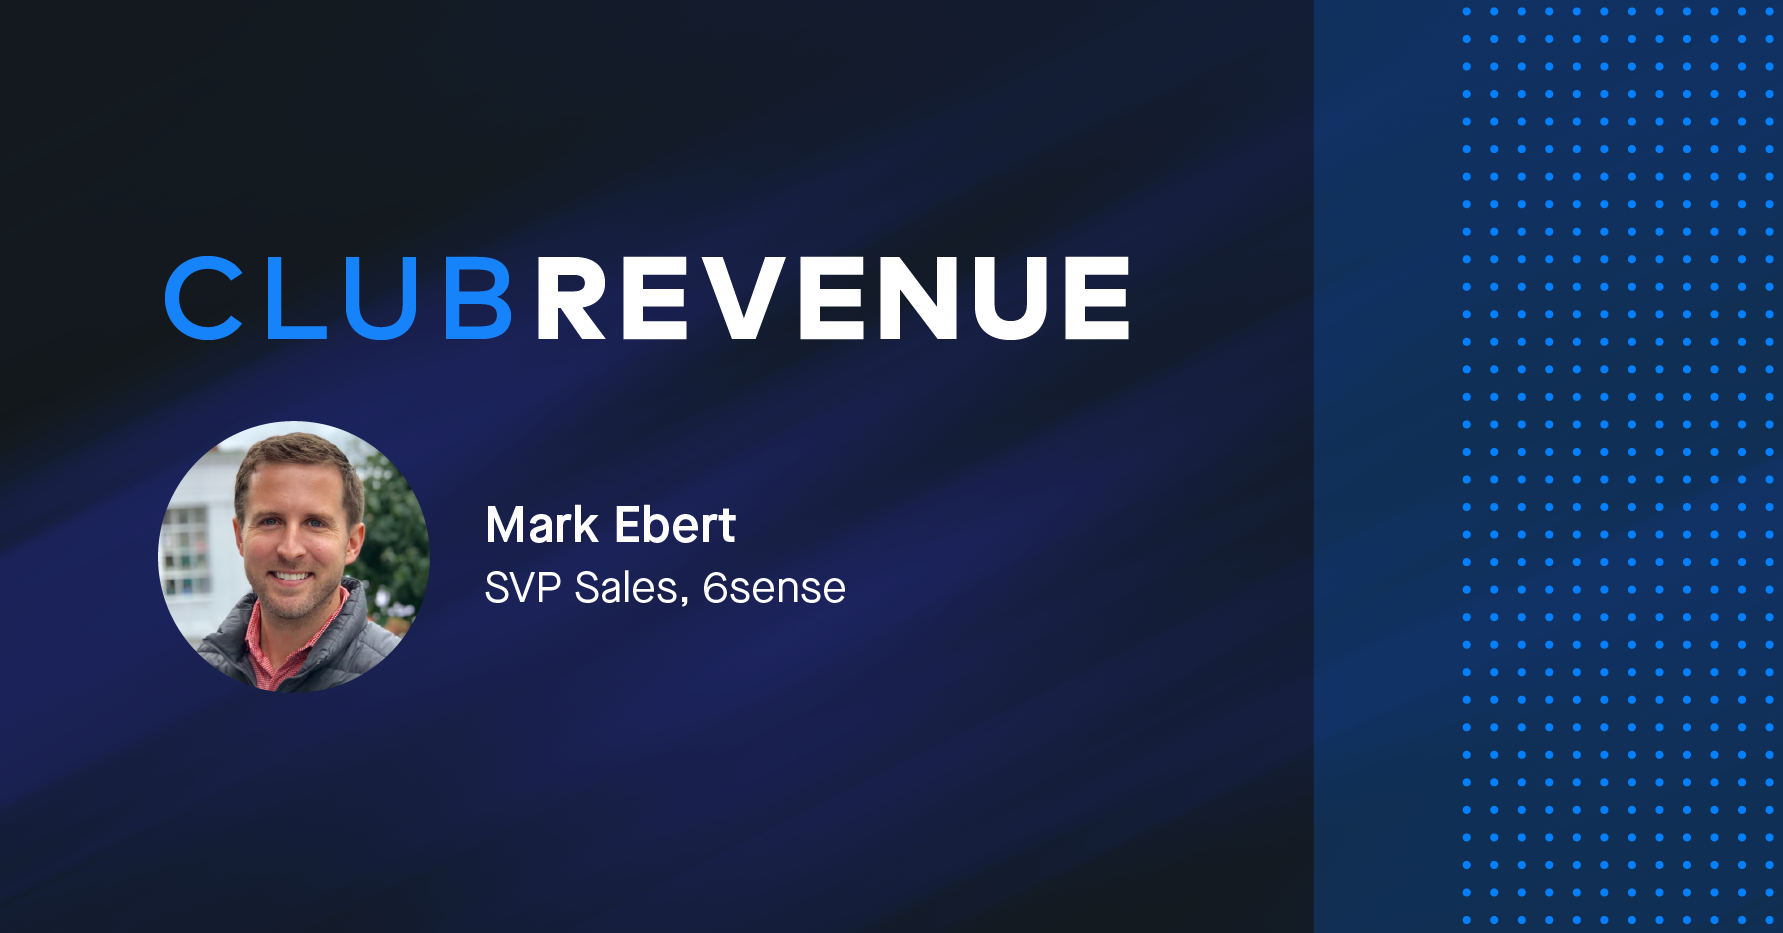 Banner image with headshot photograph of Mark Ebert, SVP Sales at 6sense